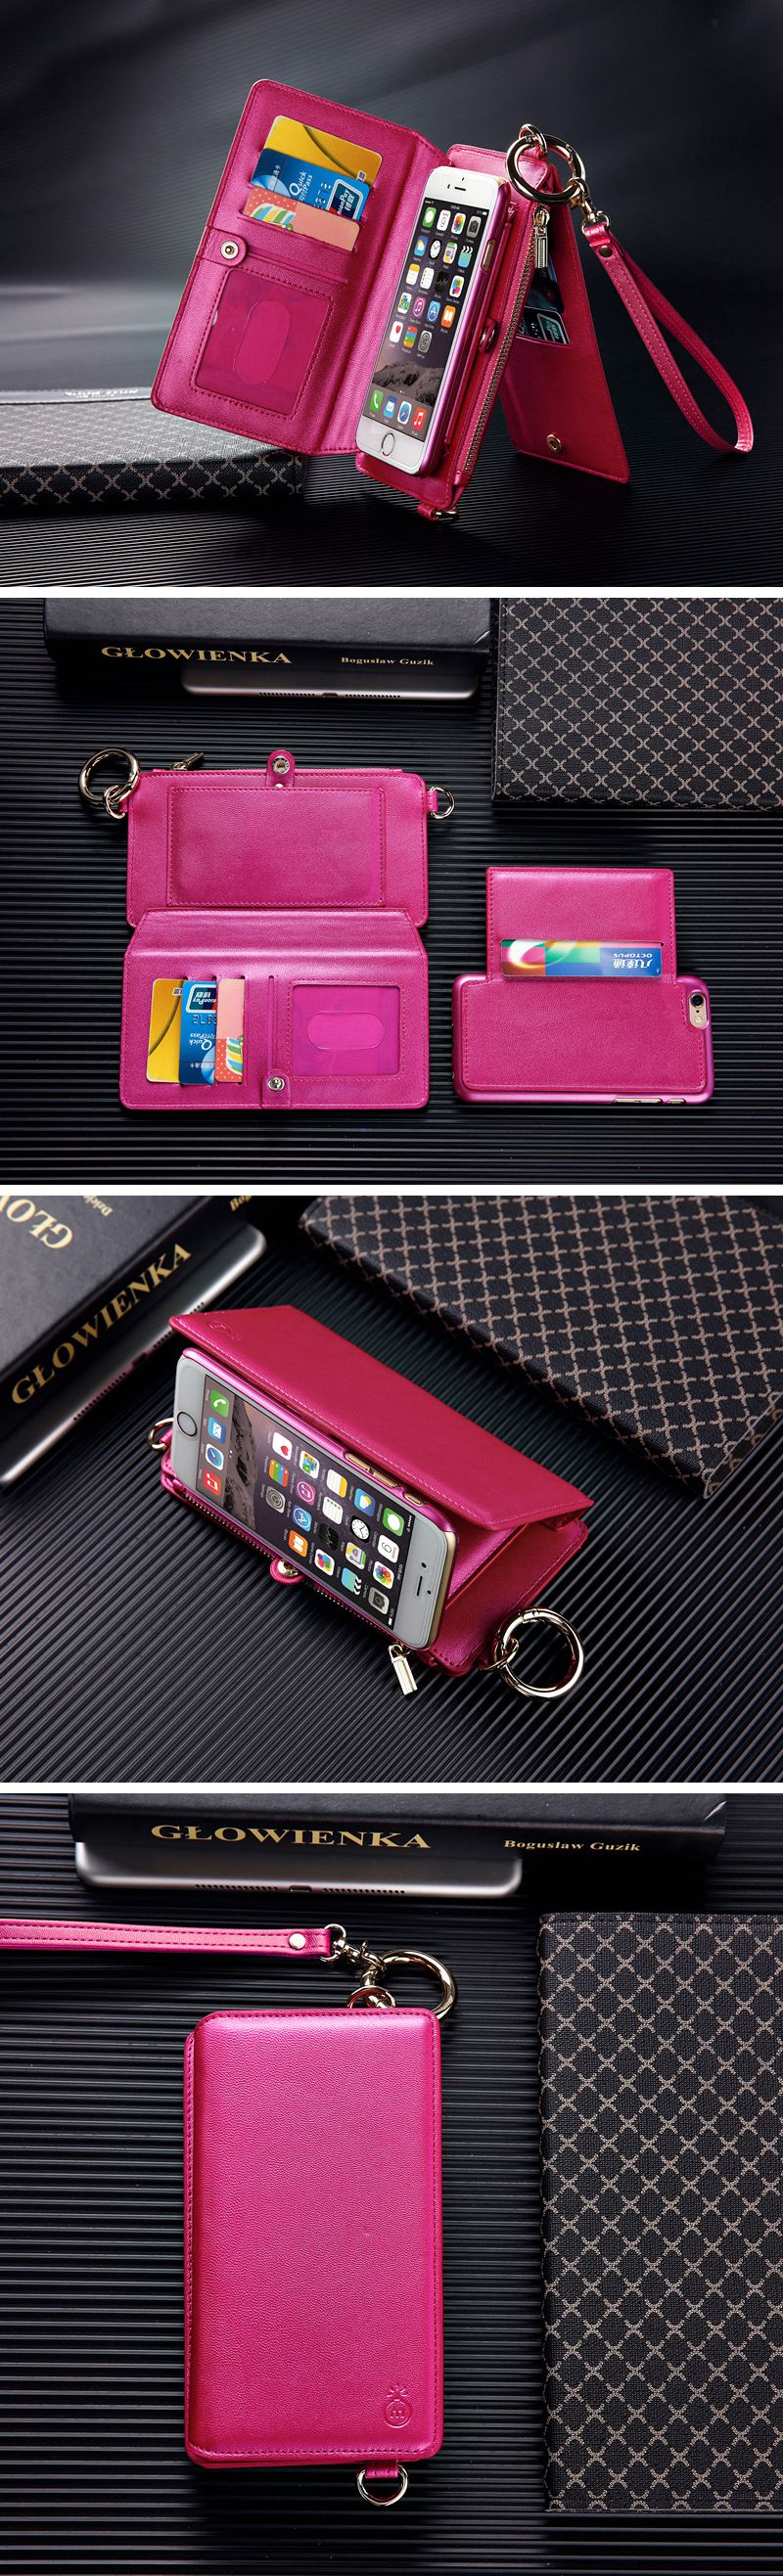 Removable PU Leather Clutch Wallet Holder Filp Card Case Shoulder Bag Women Purse For iPhone 6 6S